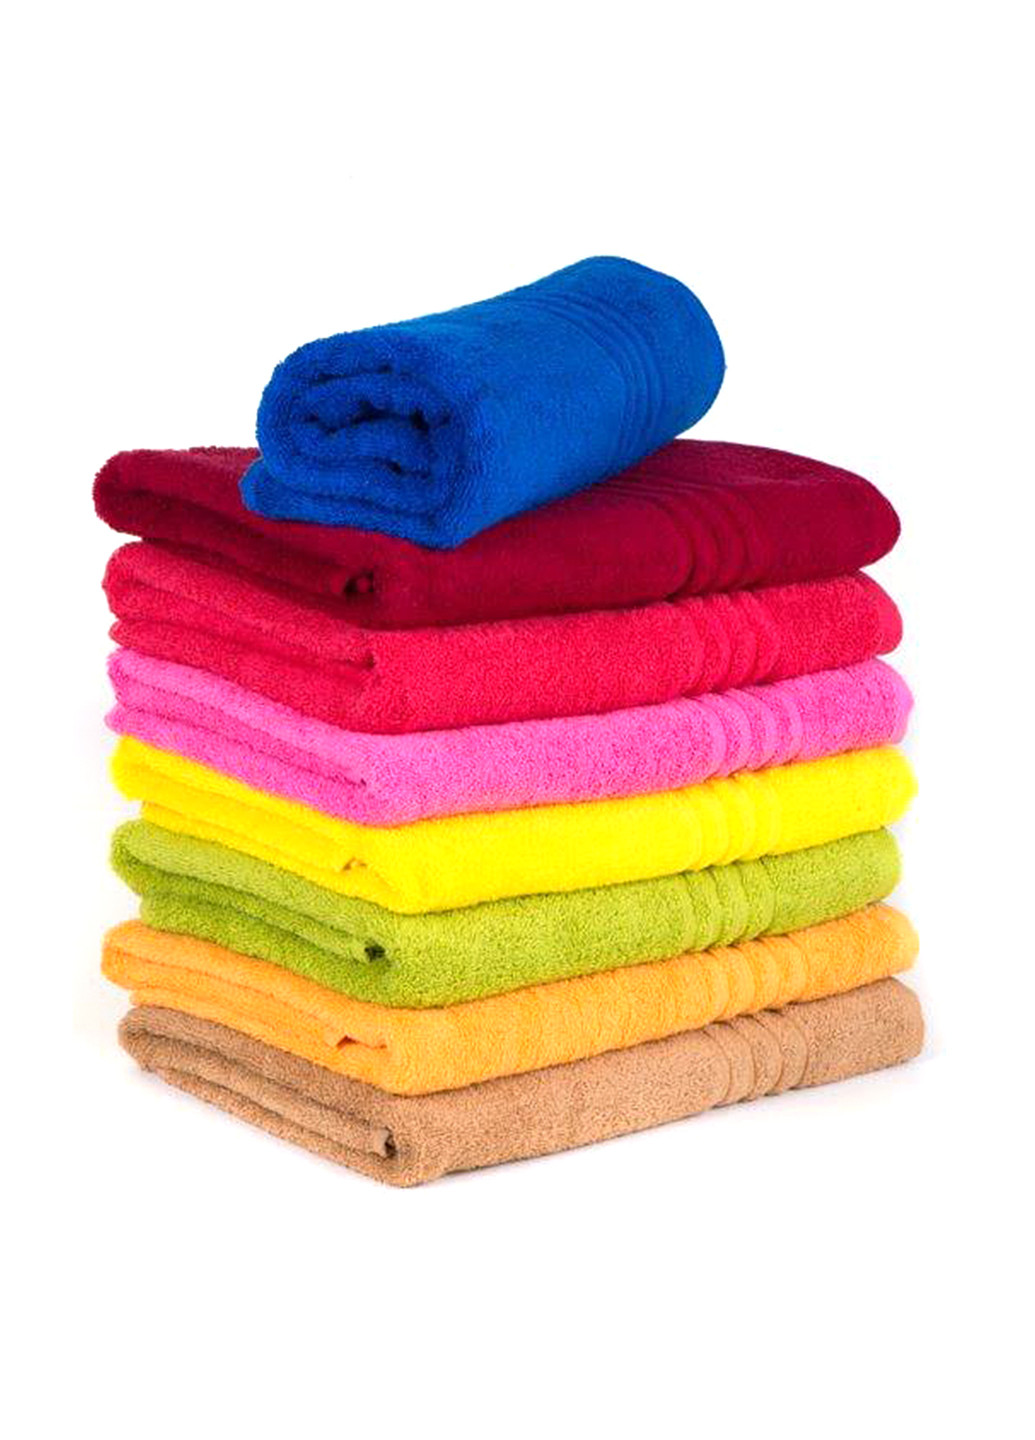 No Brand полотенце, 40х70 см однотонный бежевый производство - Индия